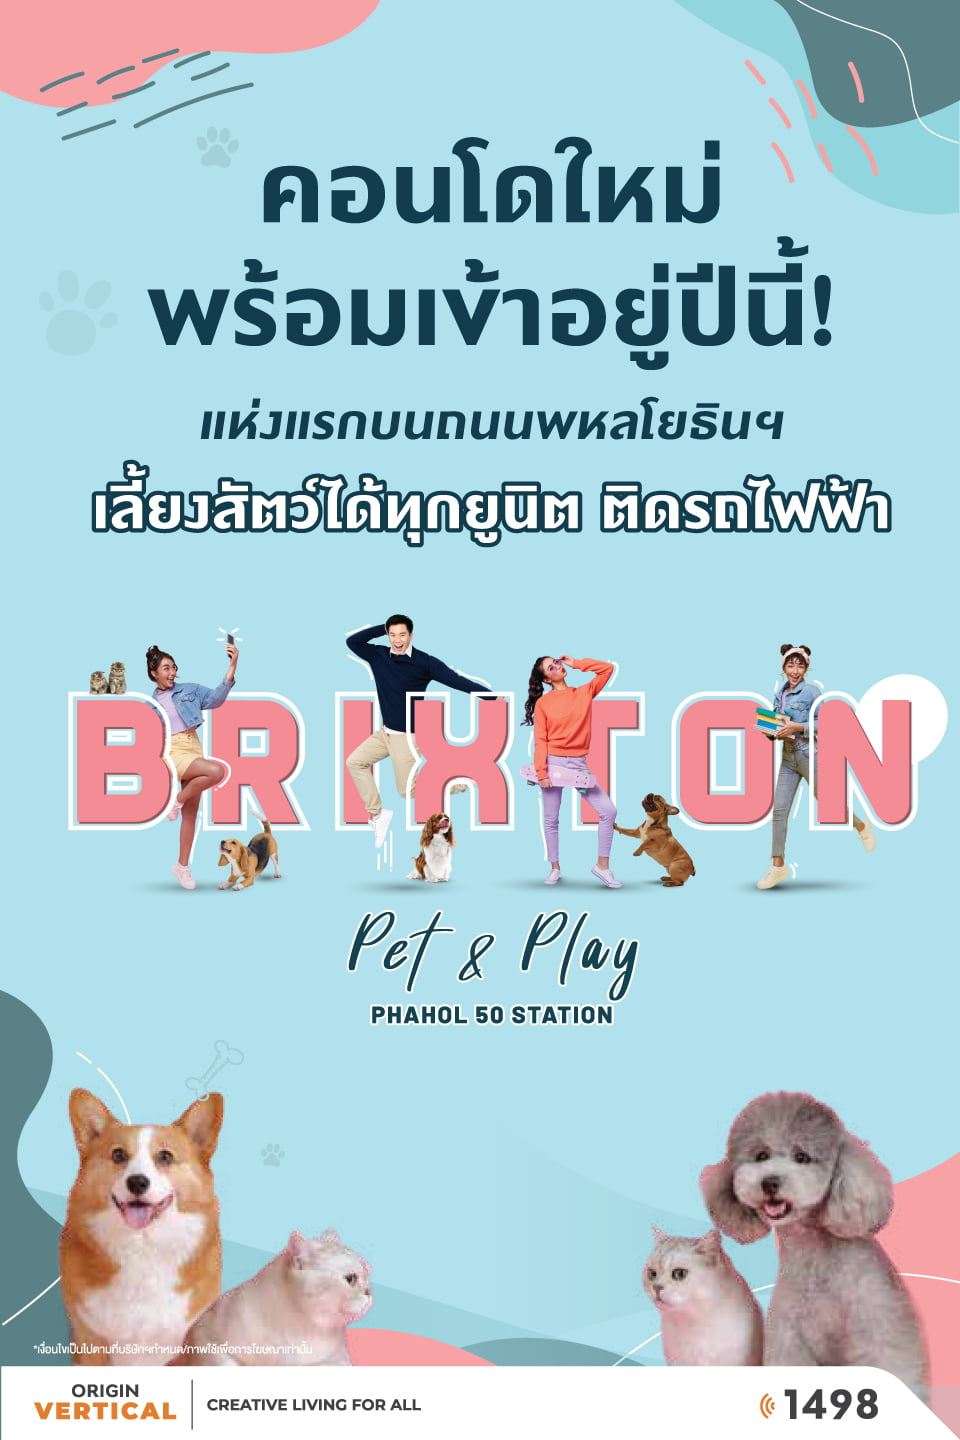 Brixton Pet & Play Phahol 50 Station Apr 24 MB